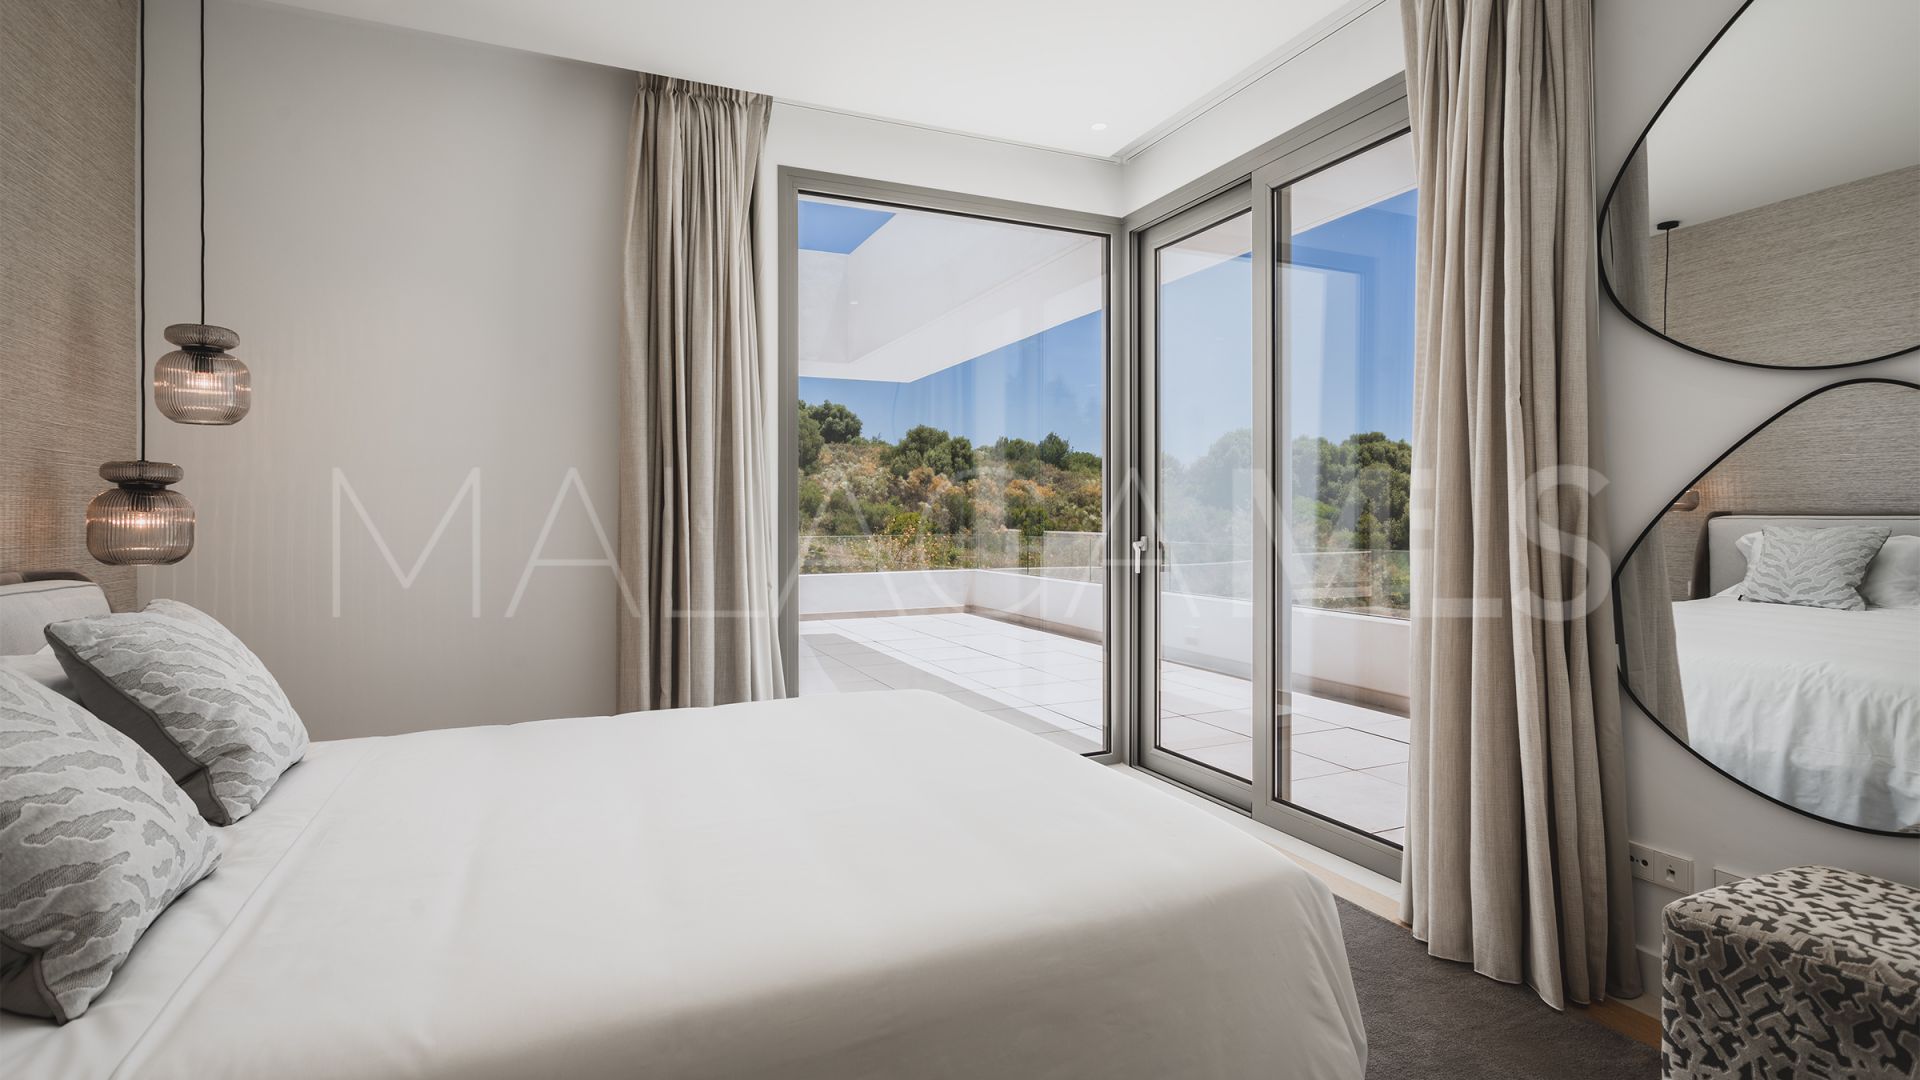 For sale Marbella City villa with 4 bedrooms